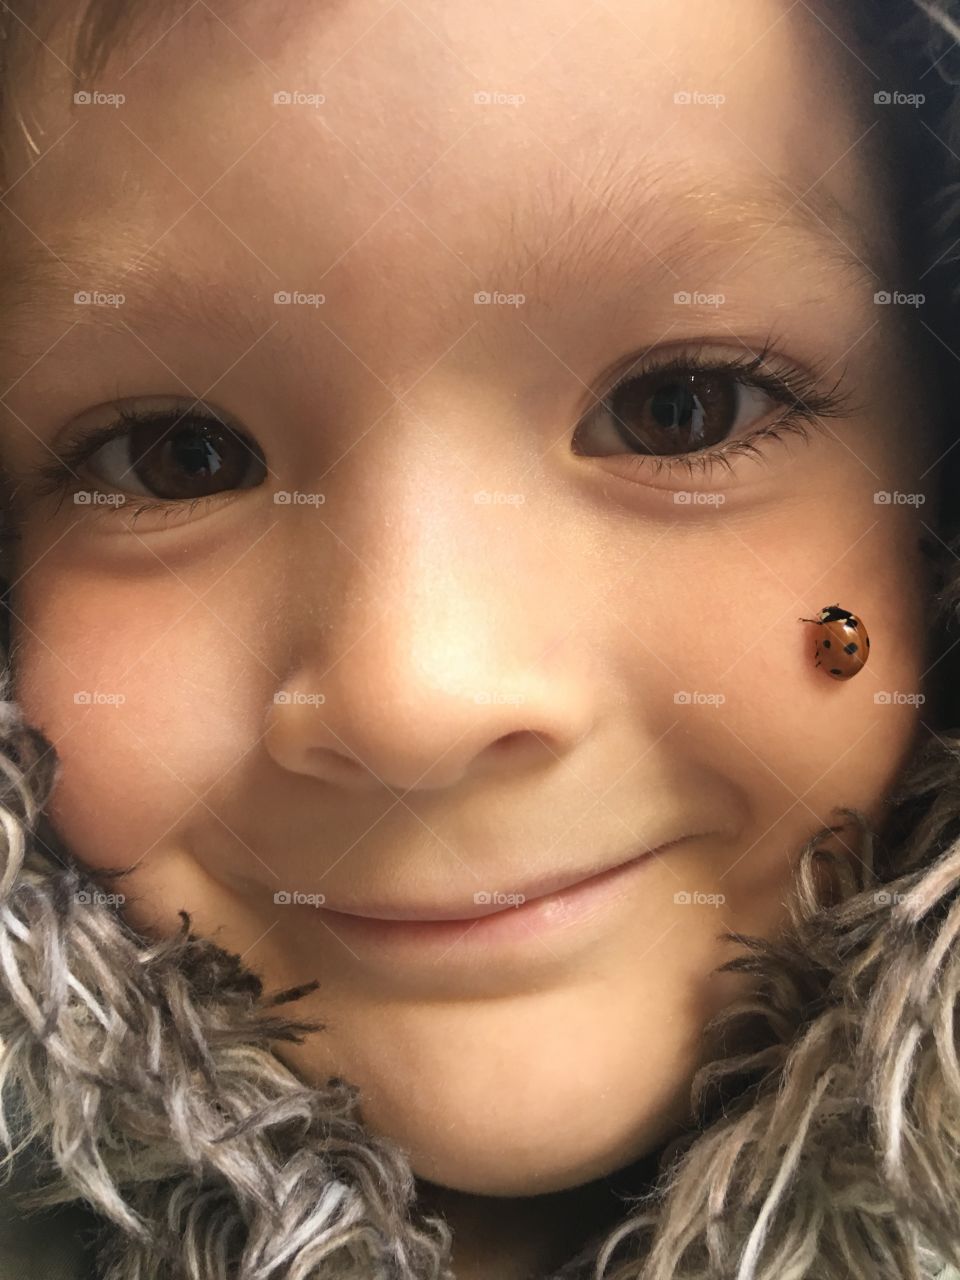 Lady bug on girl's face